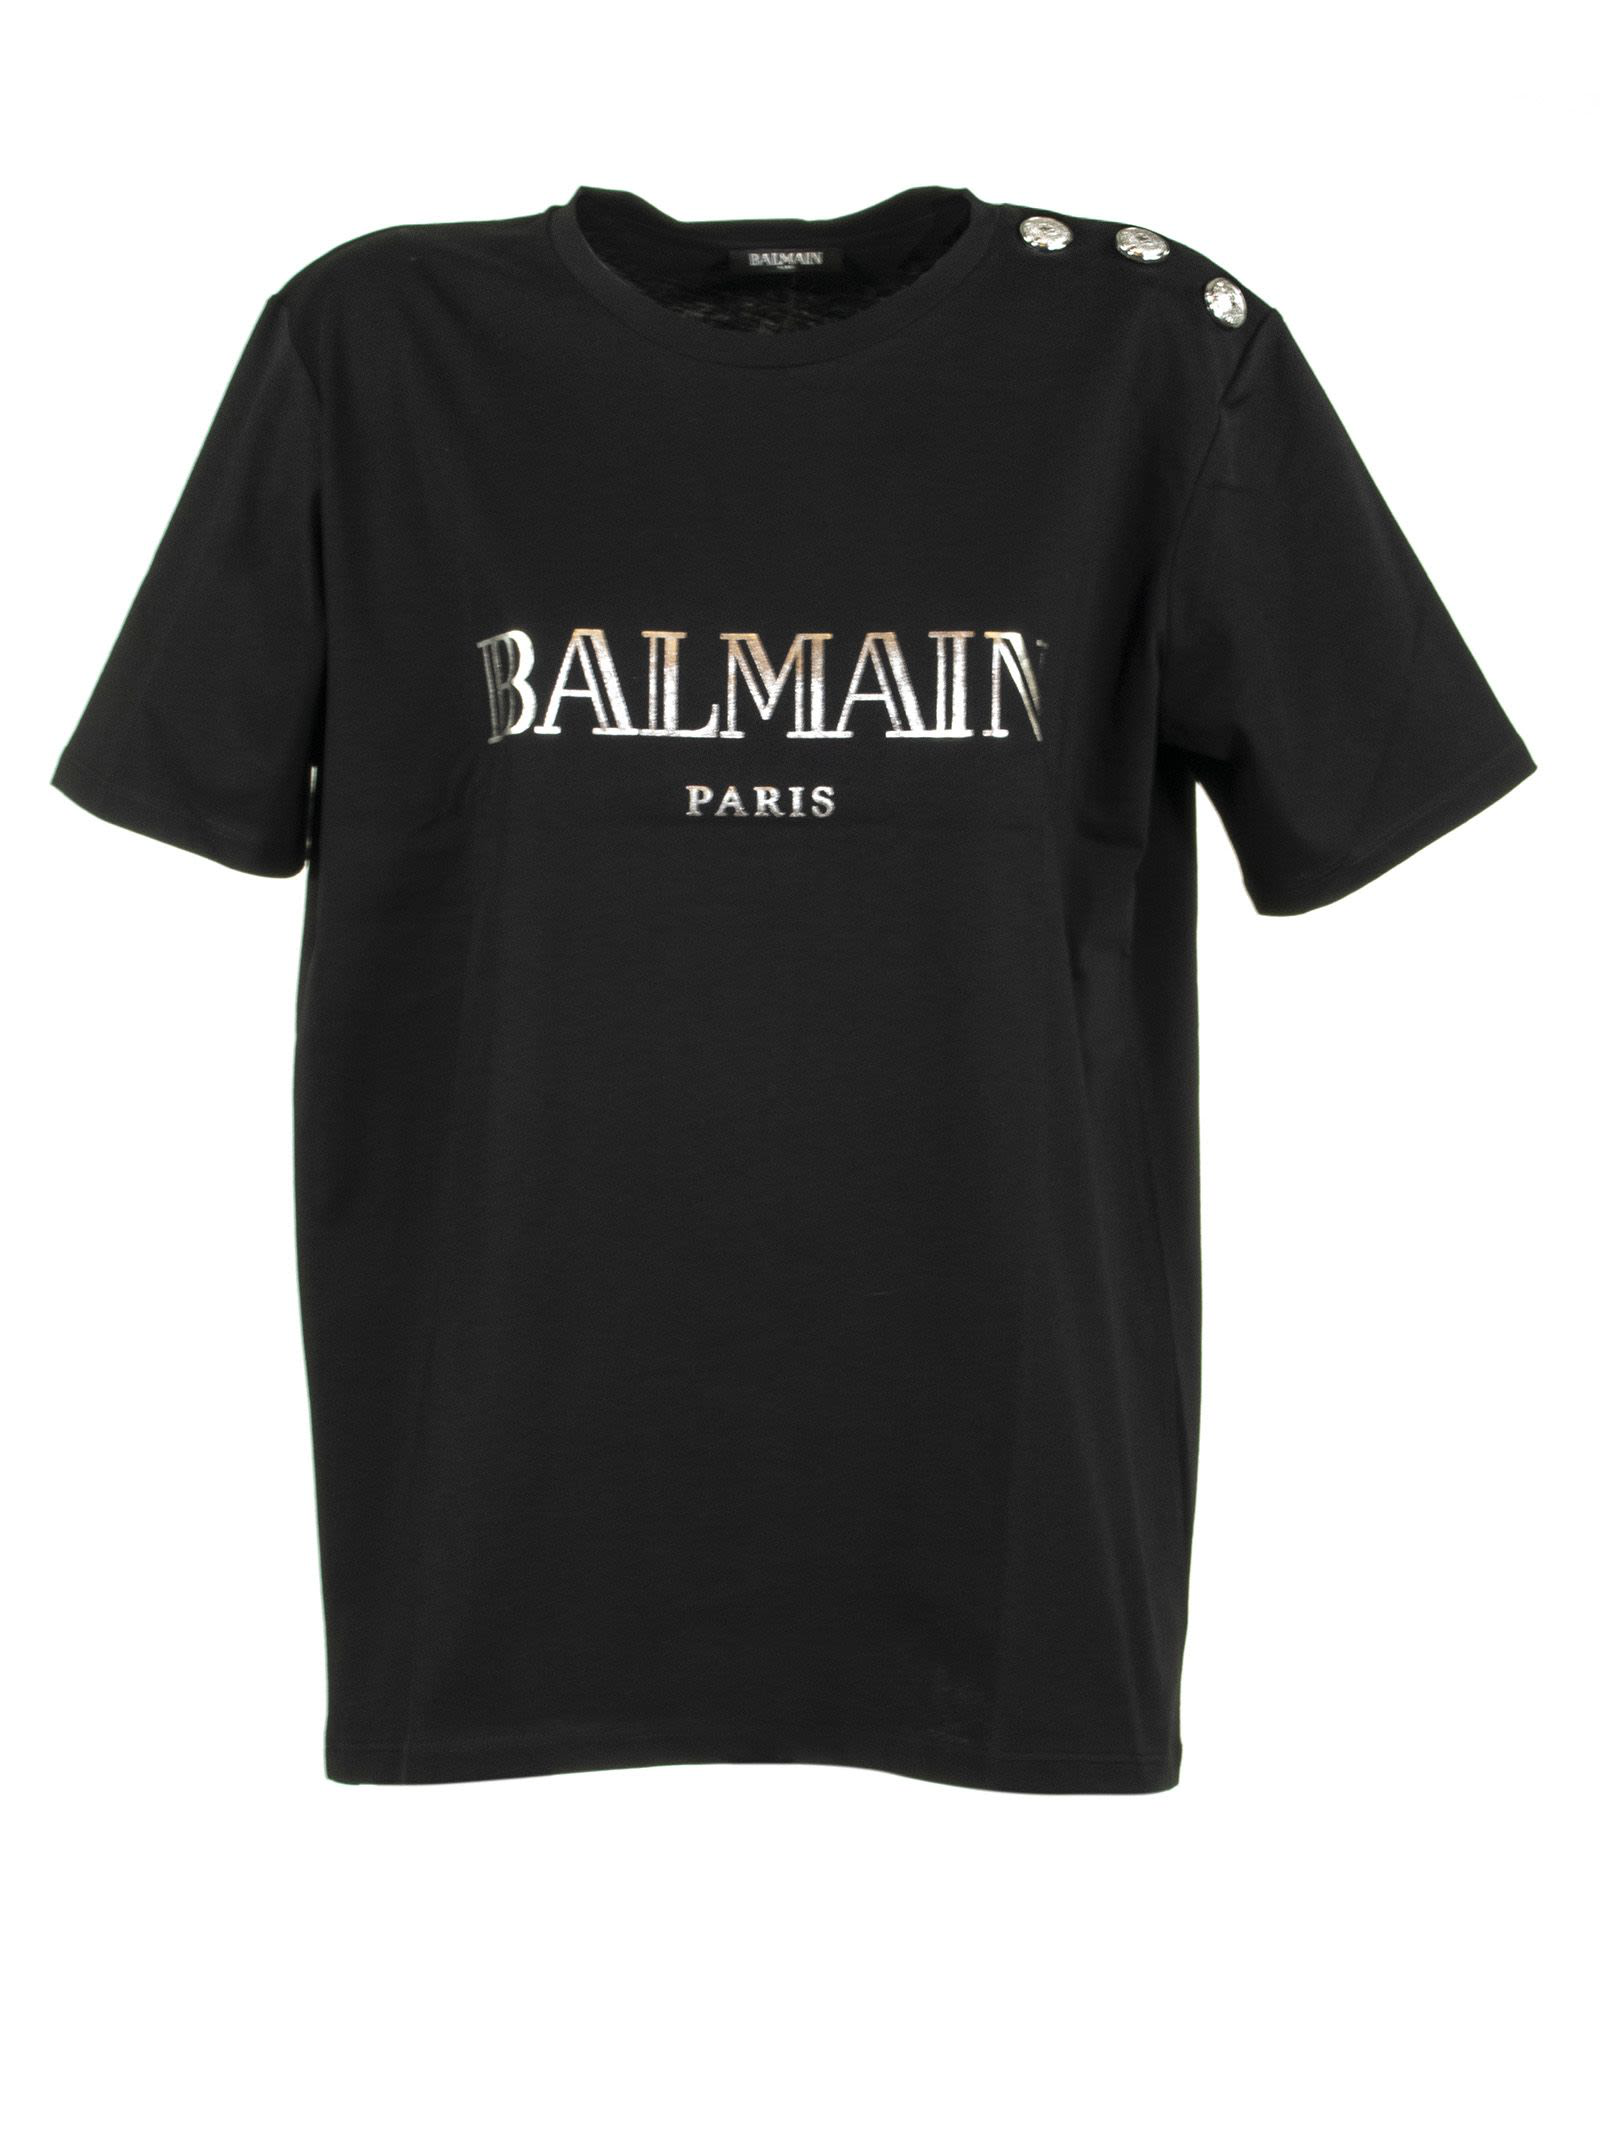 Balmain Embellished Buttons T-shirt In Black / Silver | ModeSens